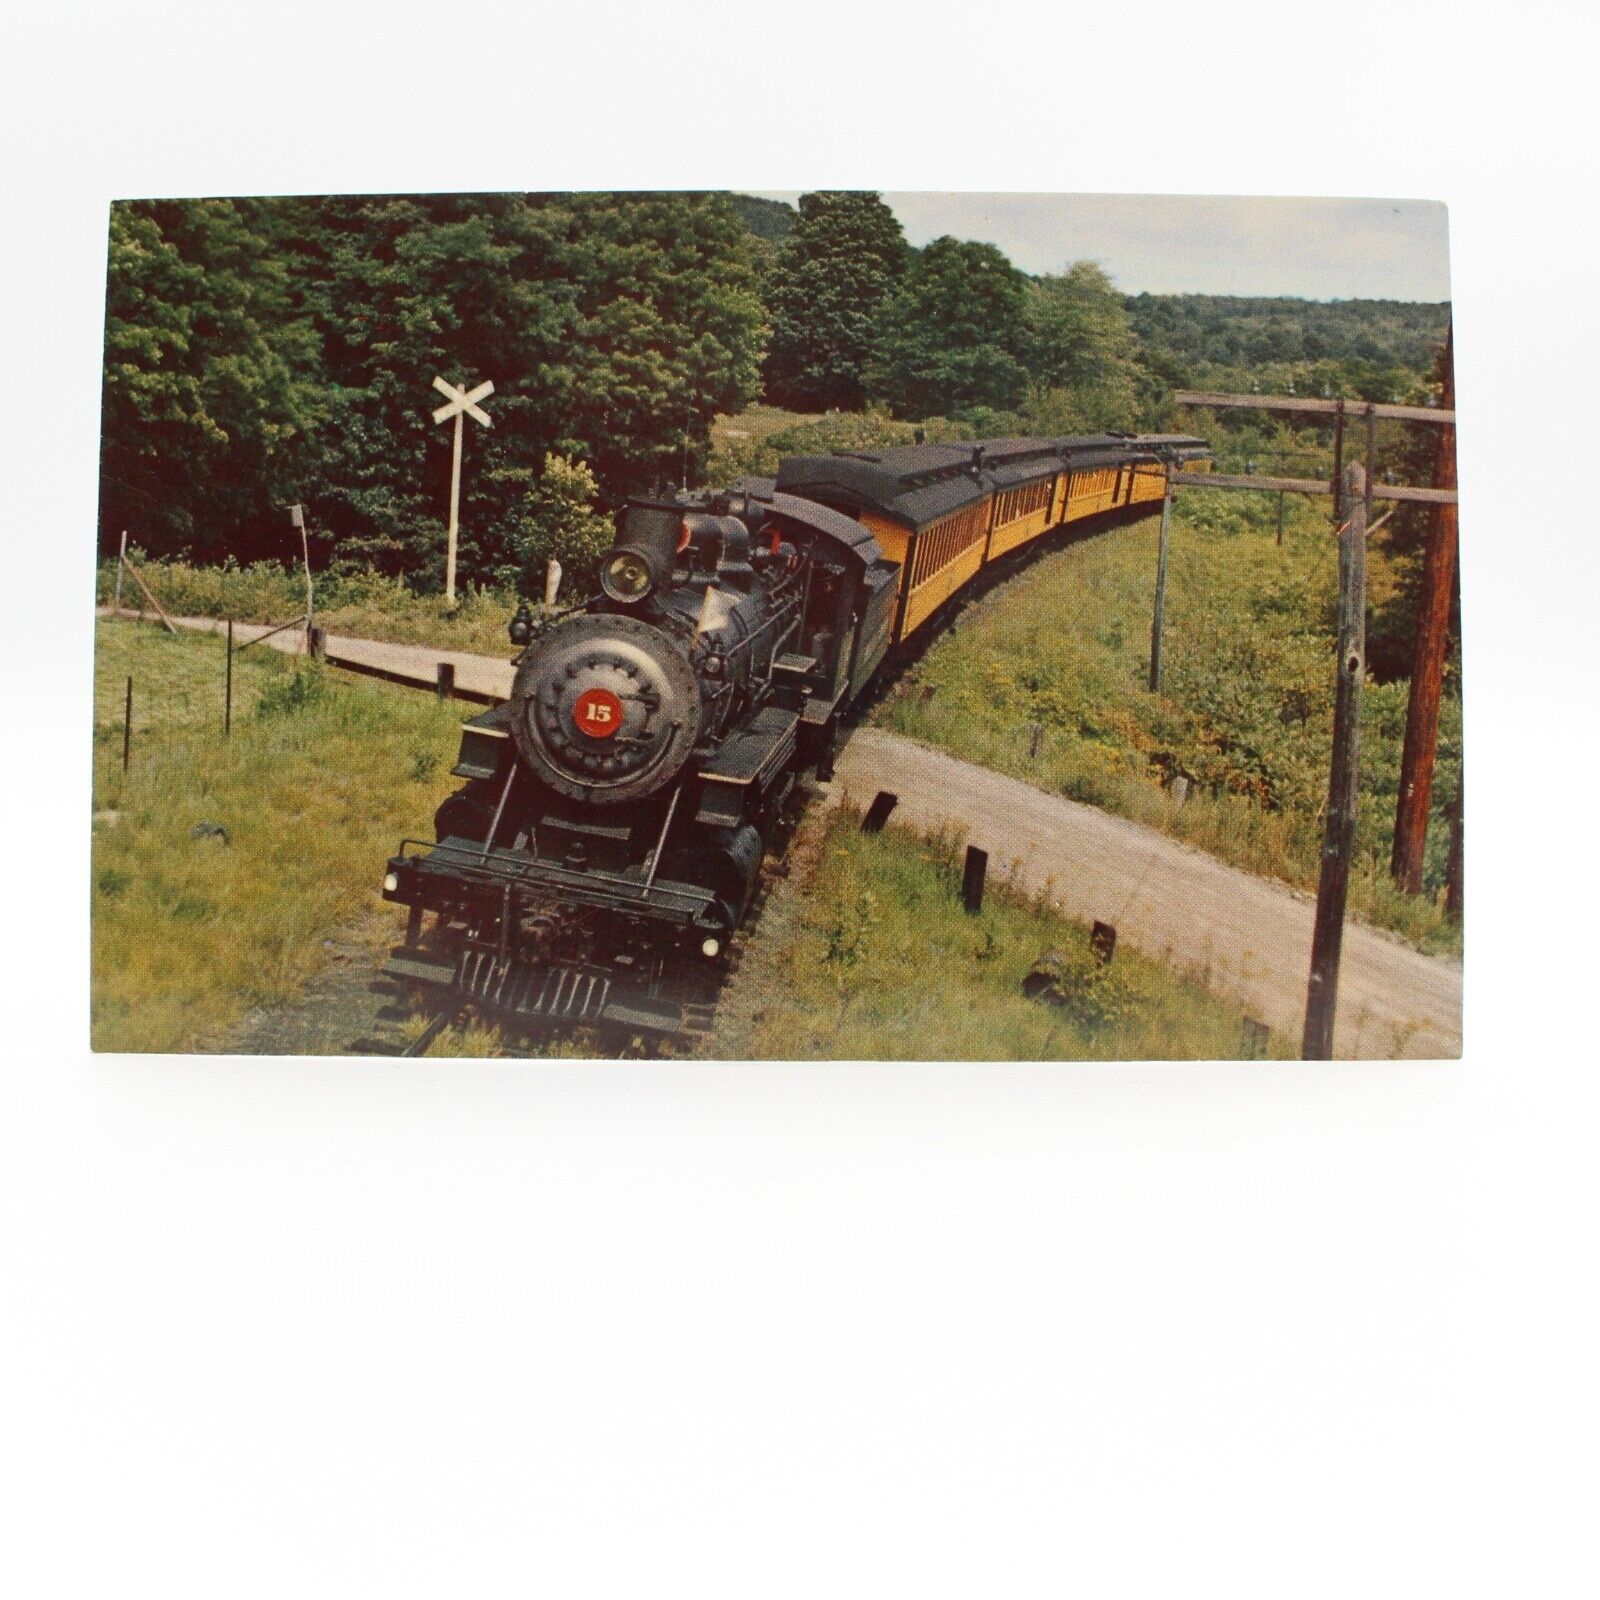 Locomotive Museum Engine No. 15 Bellows Falls Vermont Live Steam Excursion